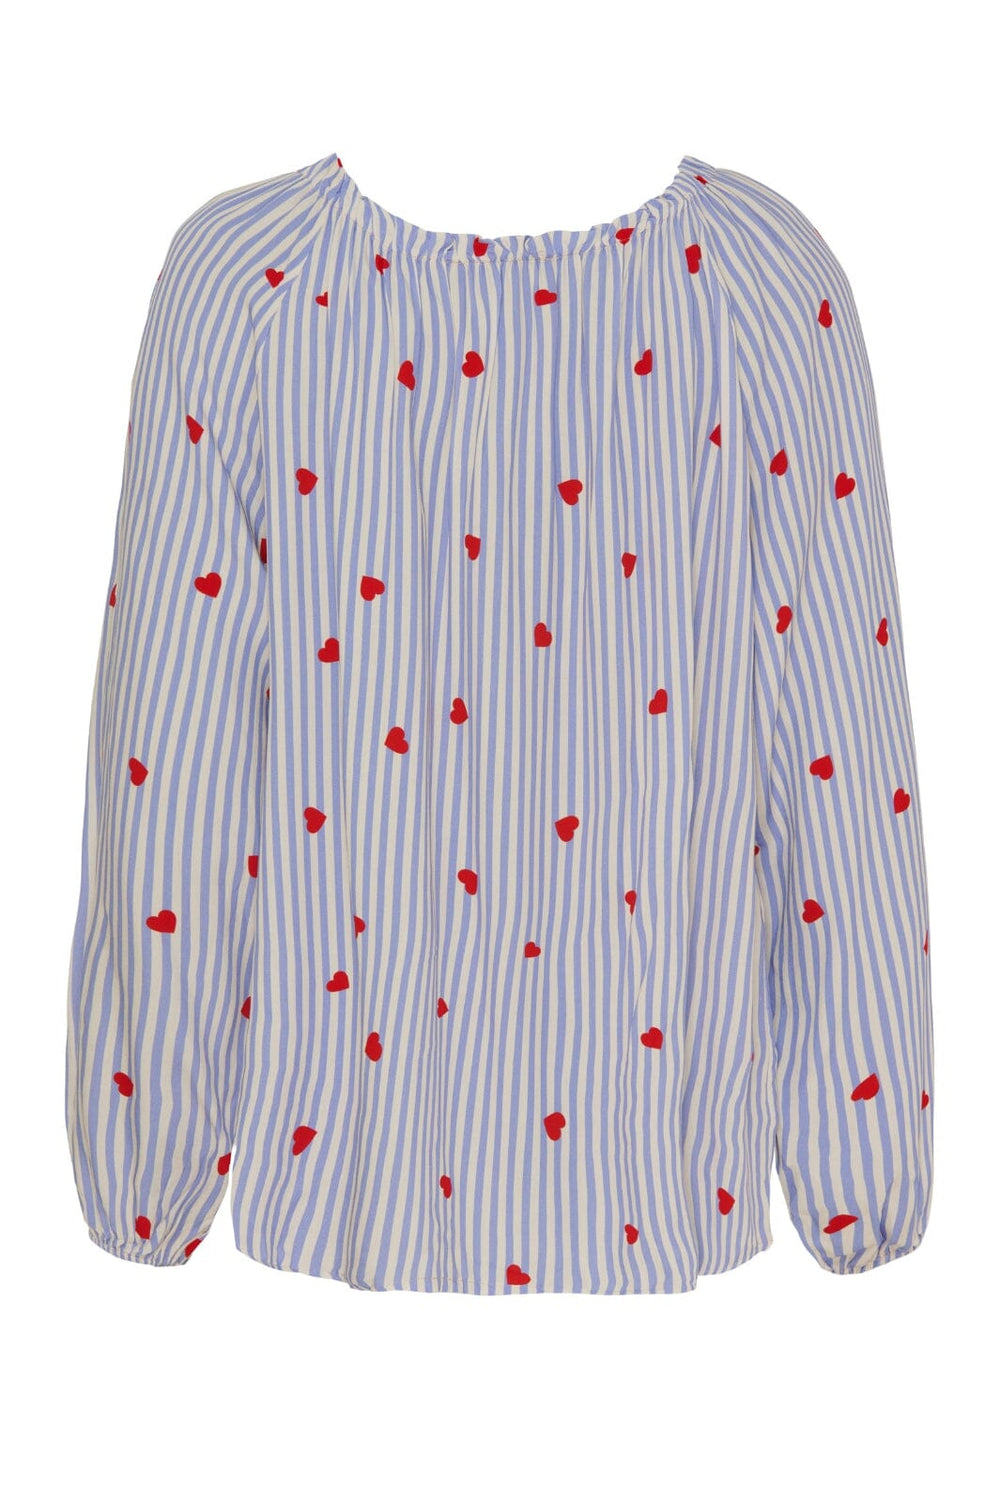 Marta Du Chateau - Mdcnadia Shirt - 6968 Jeans Skjorter 